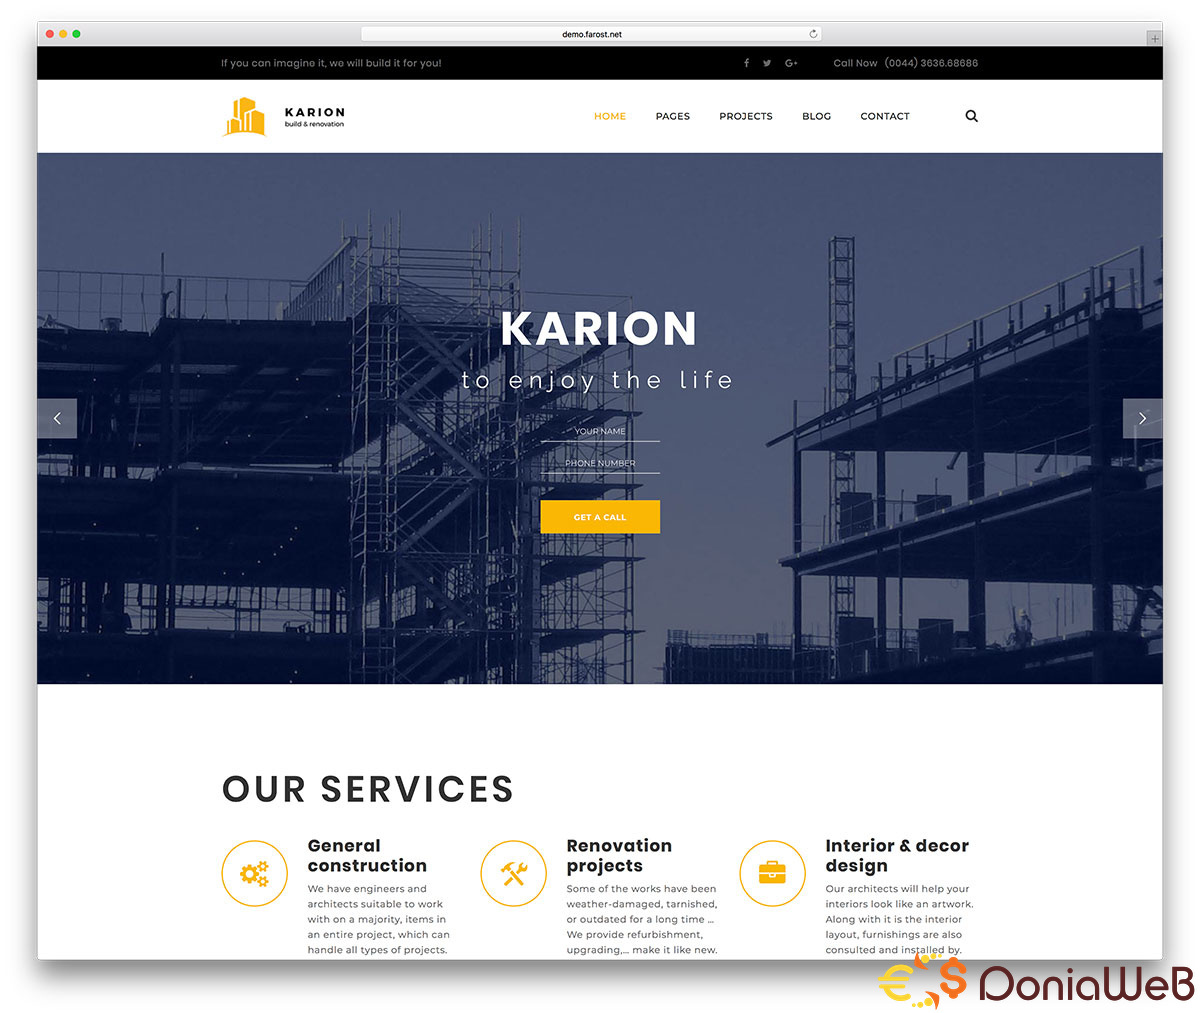 Karion - Construction & Building WordPress Theme